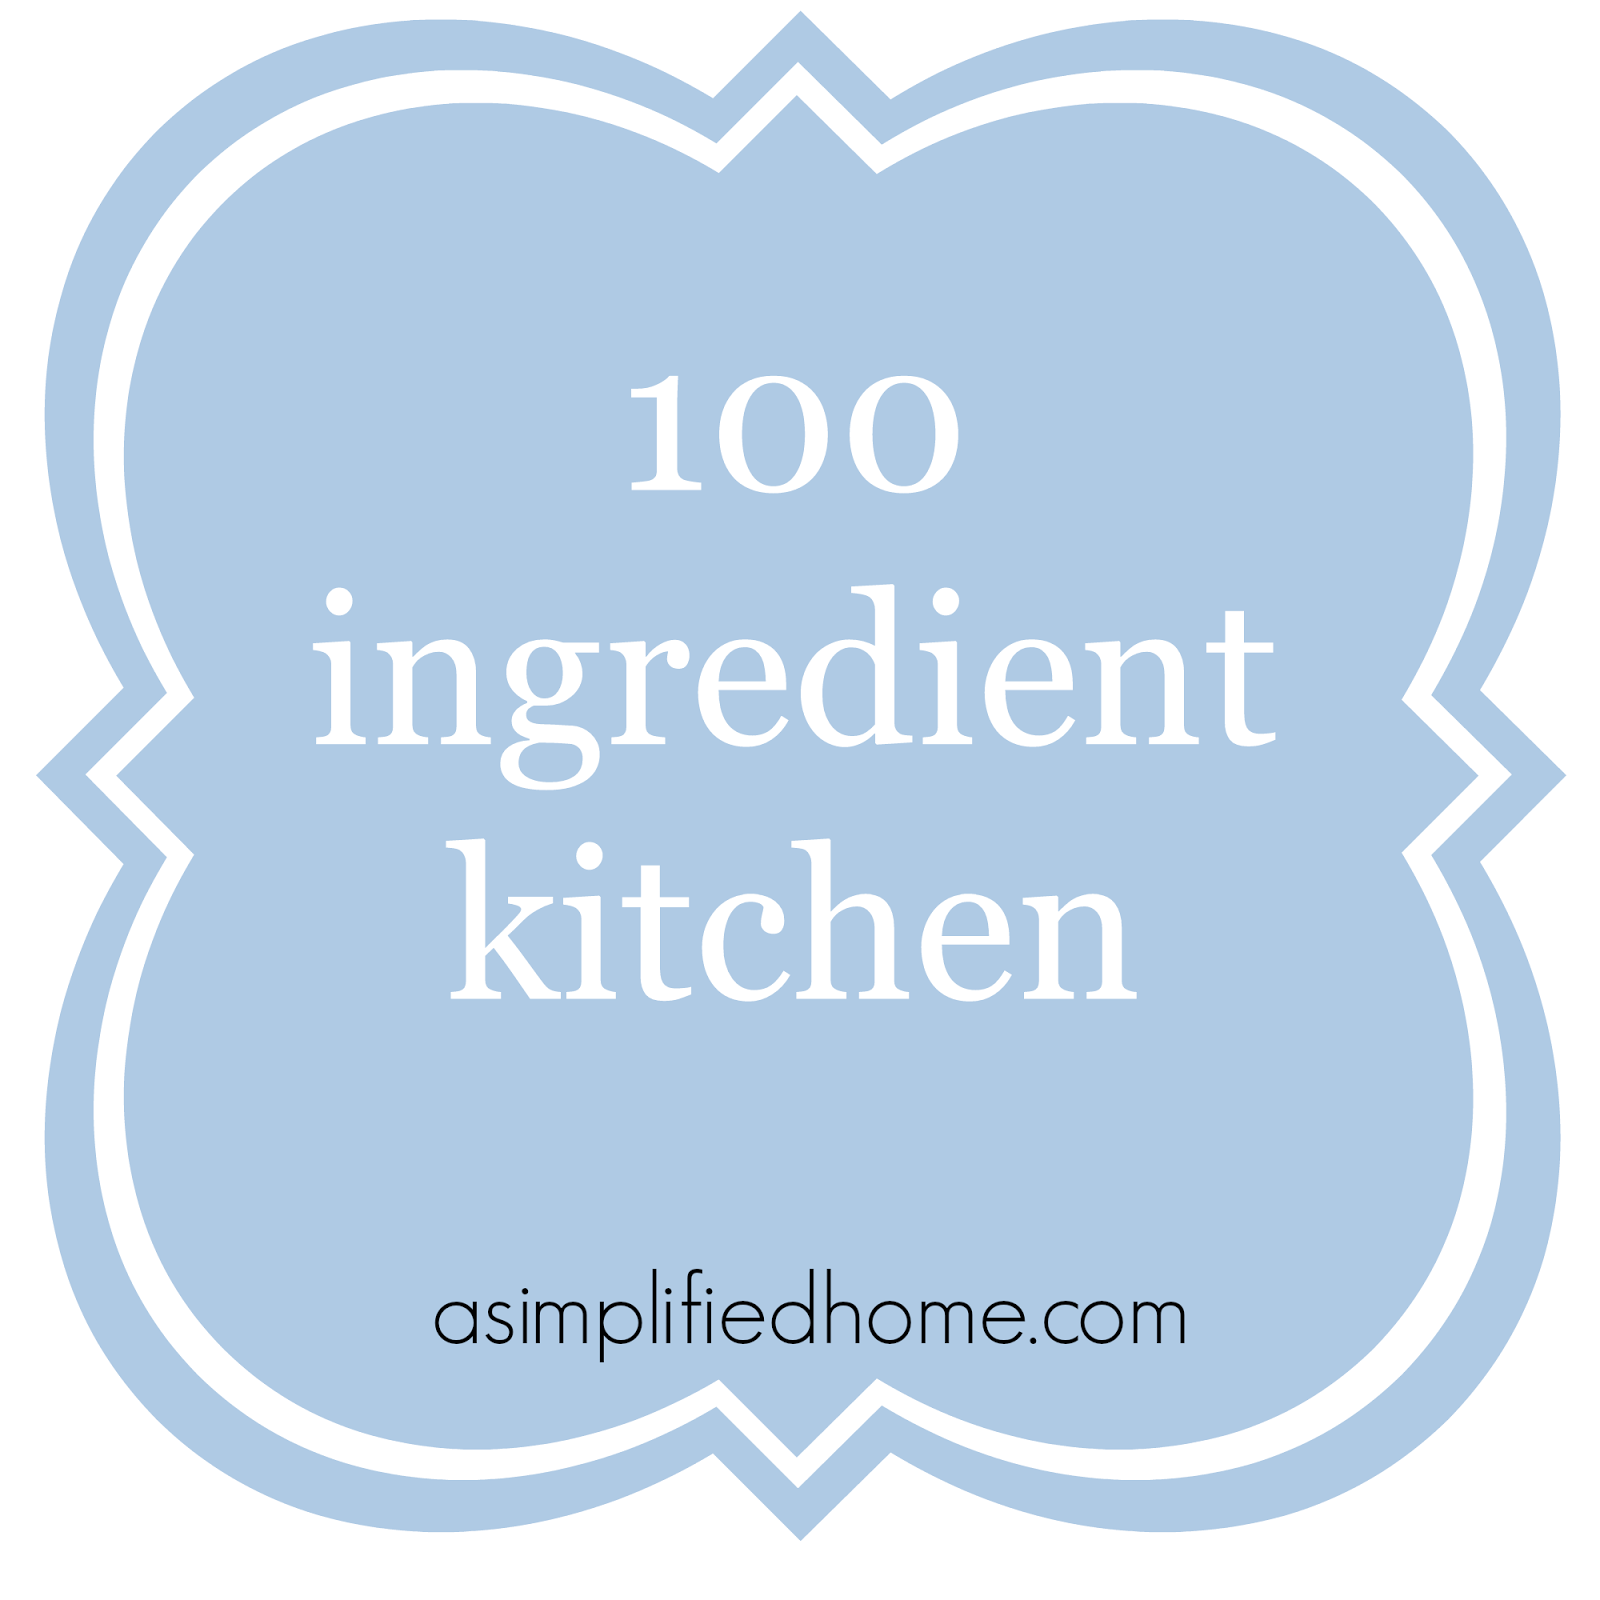 100 ingredient kitchen | asimplifiedhome.com